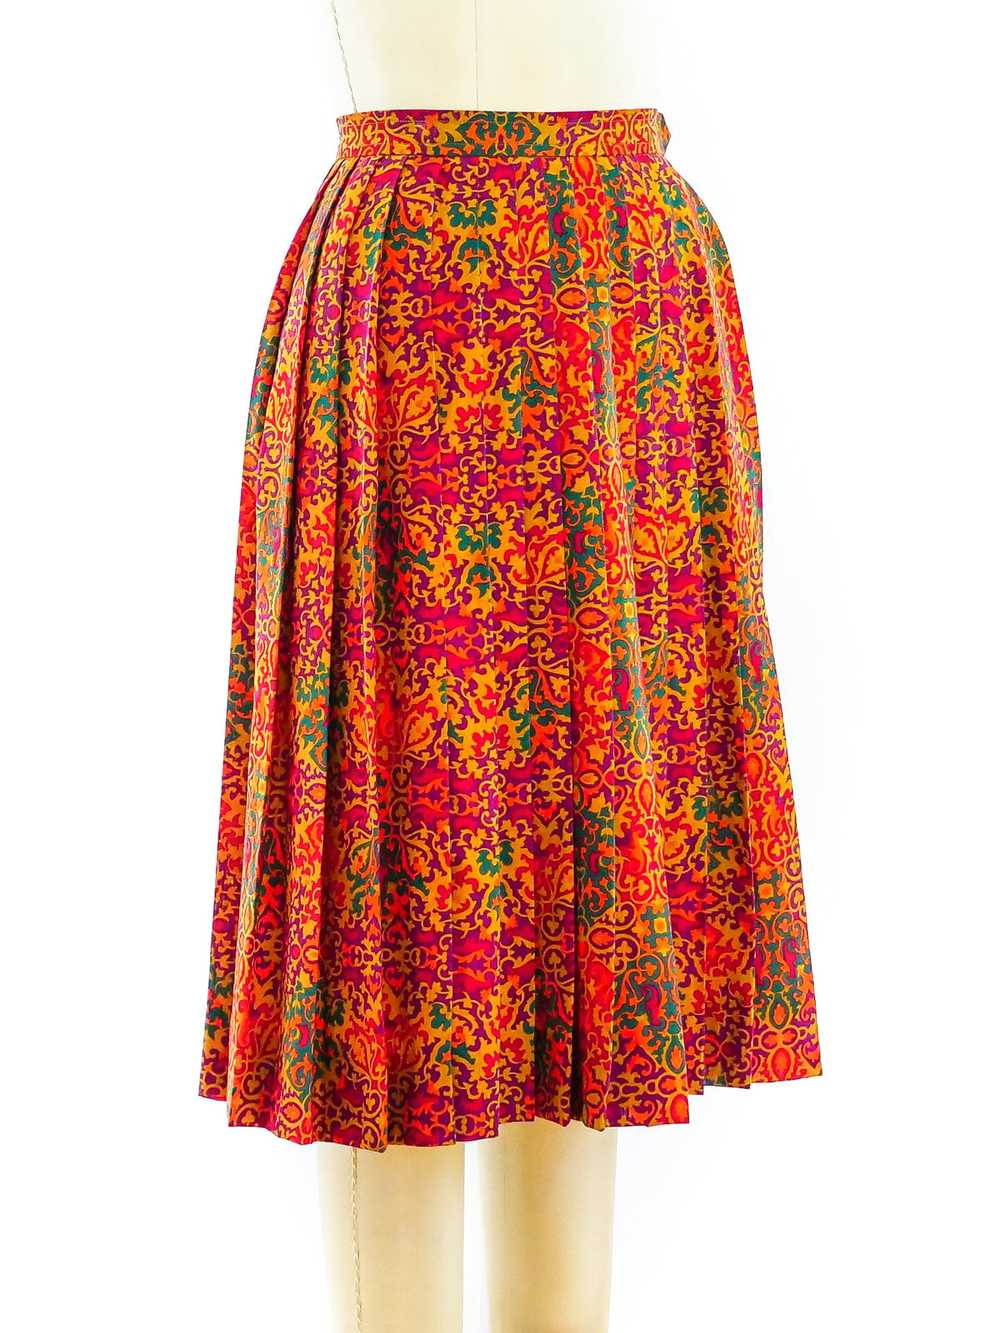 Yves Saint Laurent Pleated Print Skirt - image 2